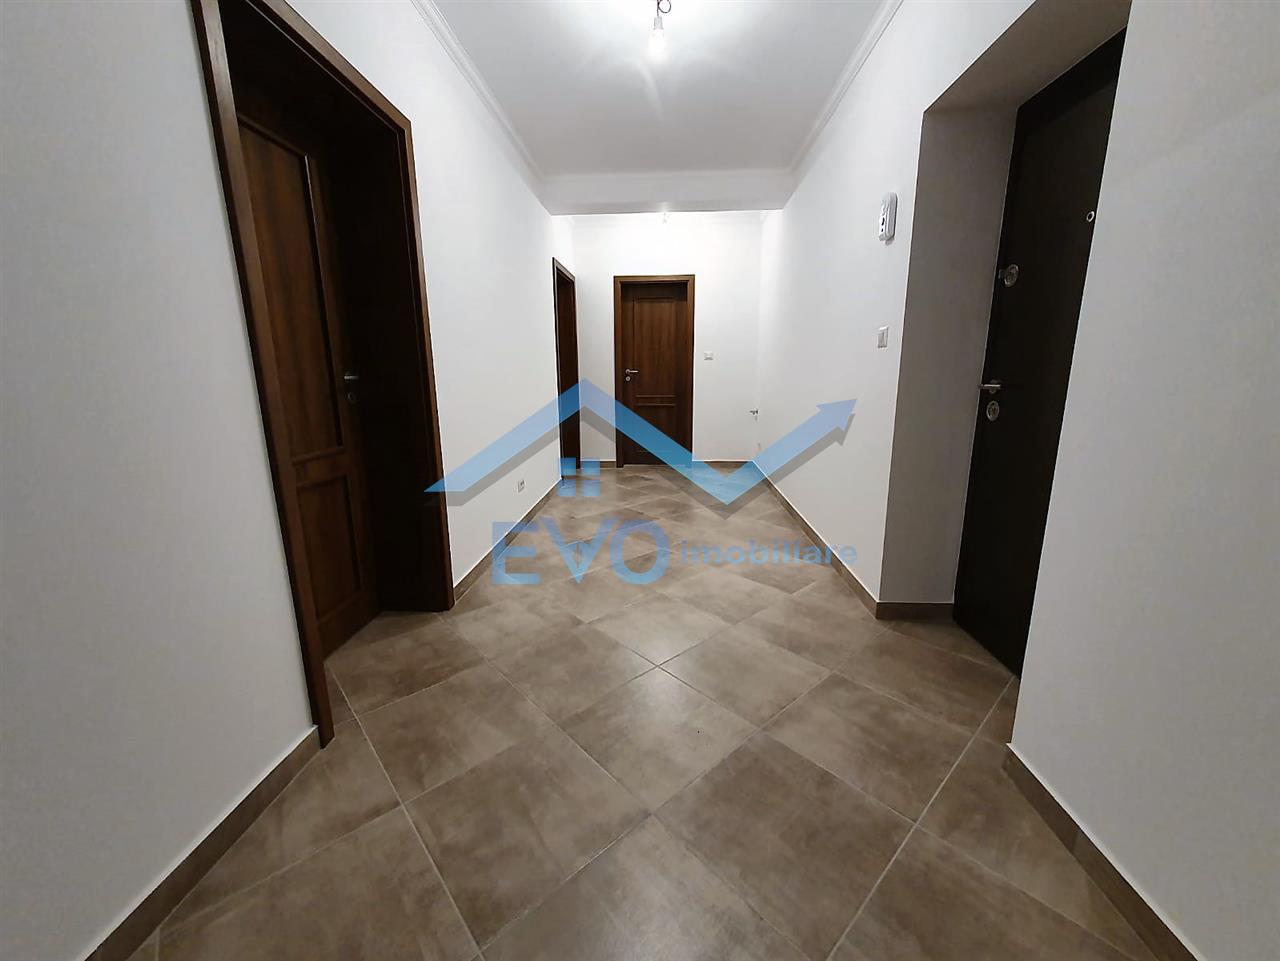 Vanzare apartament nou 2 camere decomandat Galata, apartamente de vanzare Galata pret mic, agentii imobiliare iasi cu 0 comision